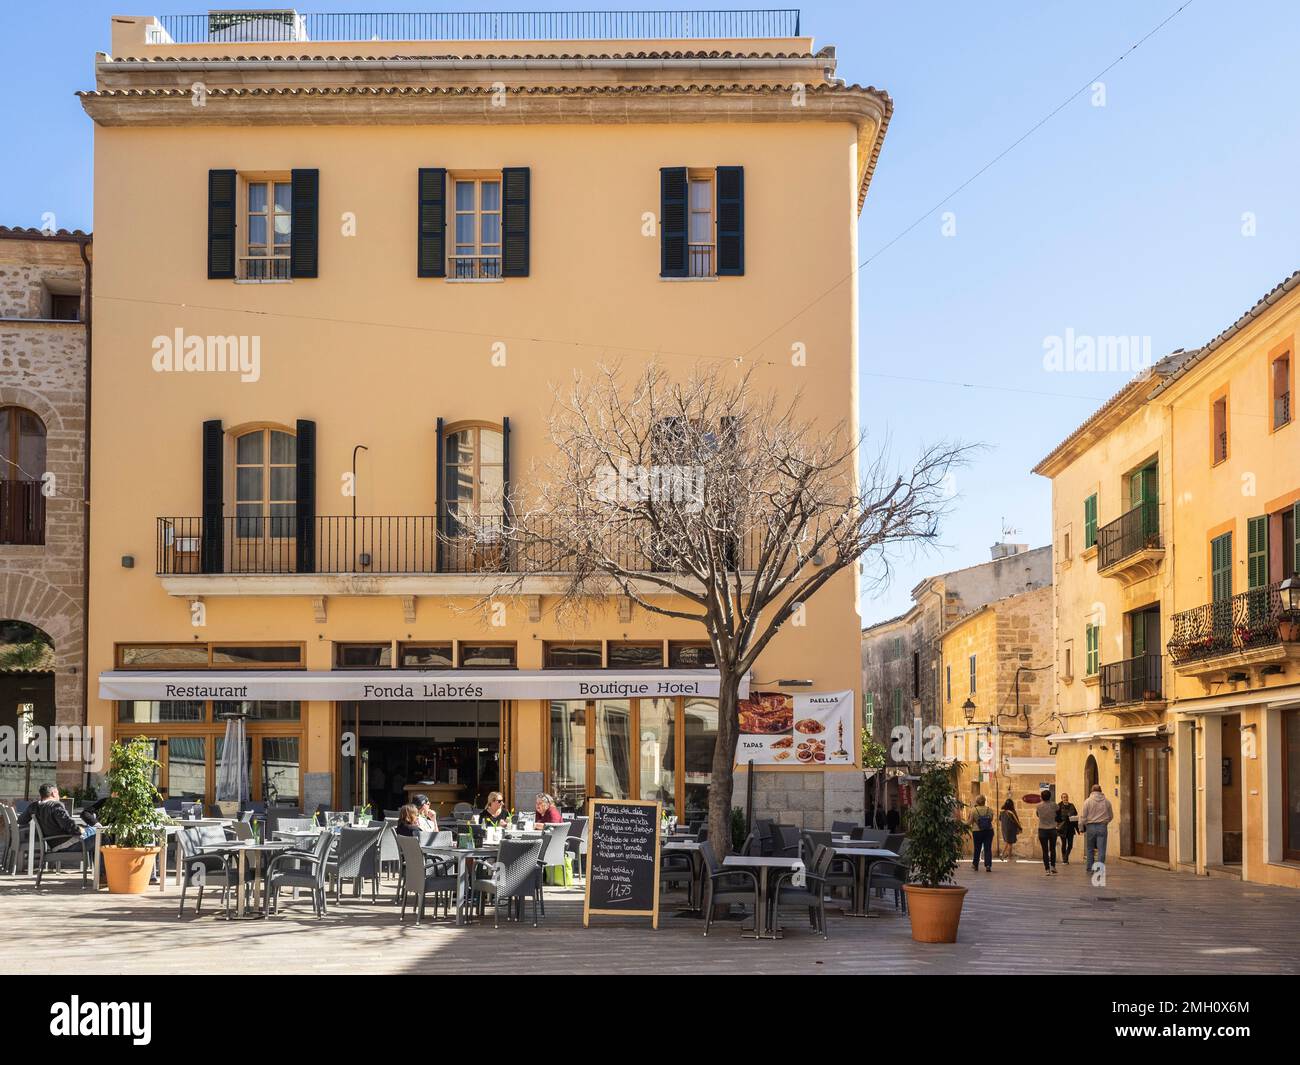 Café auf dem Platz, Altstadt, Alcudia, Mallorca, Spanien Stockfoto